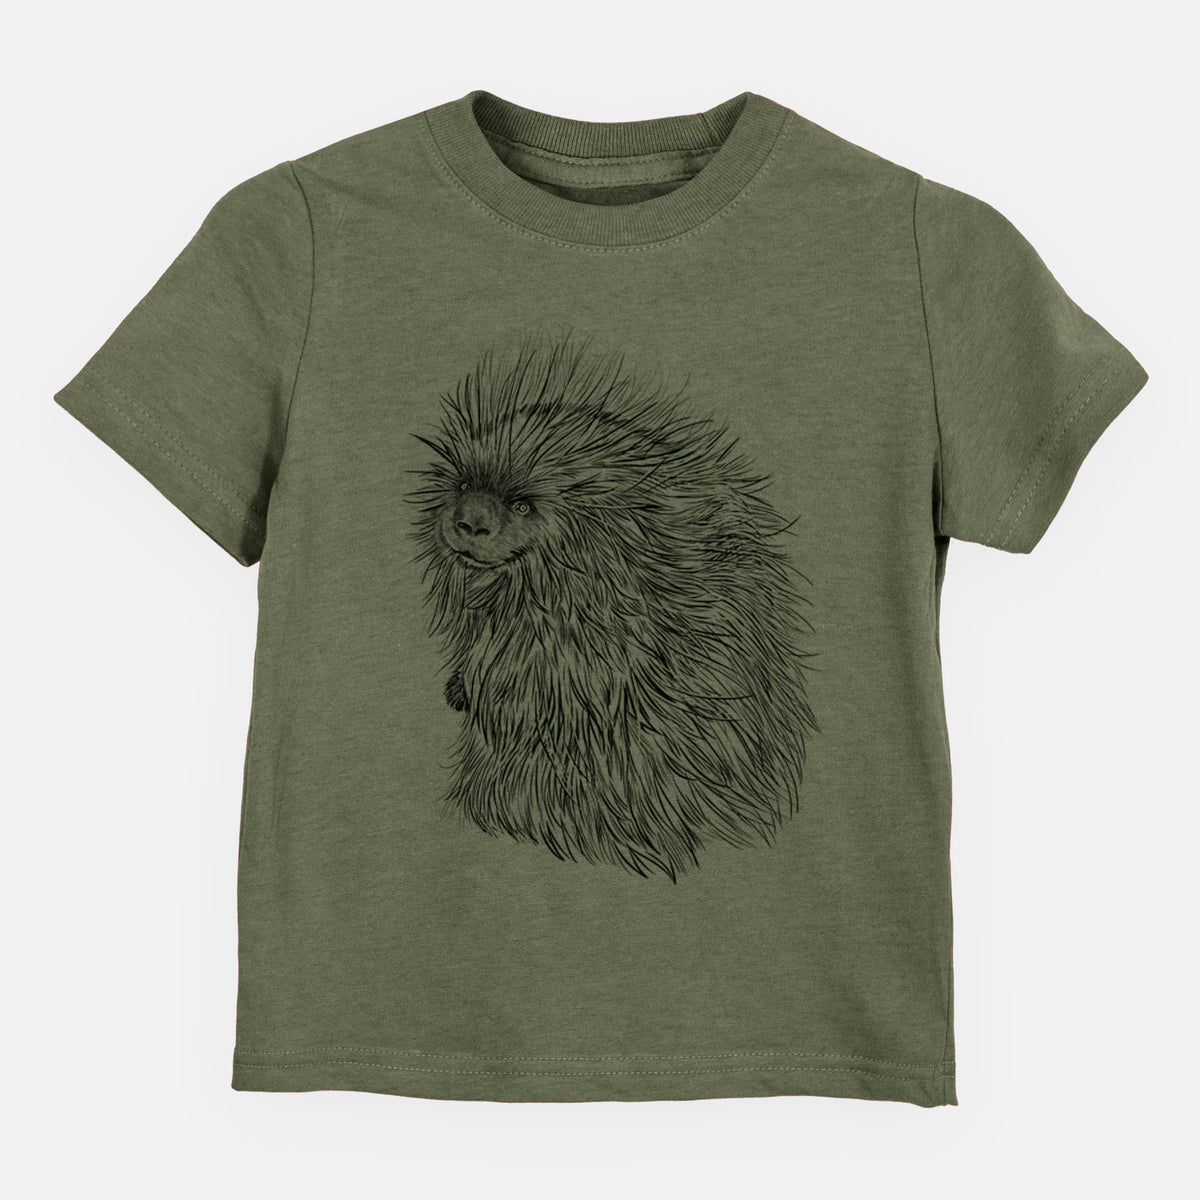 North American Porcupine - Erethizon dorsatum - Kids Shirt